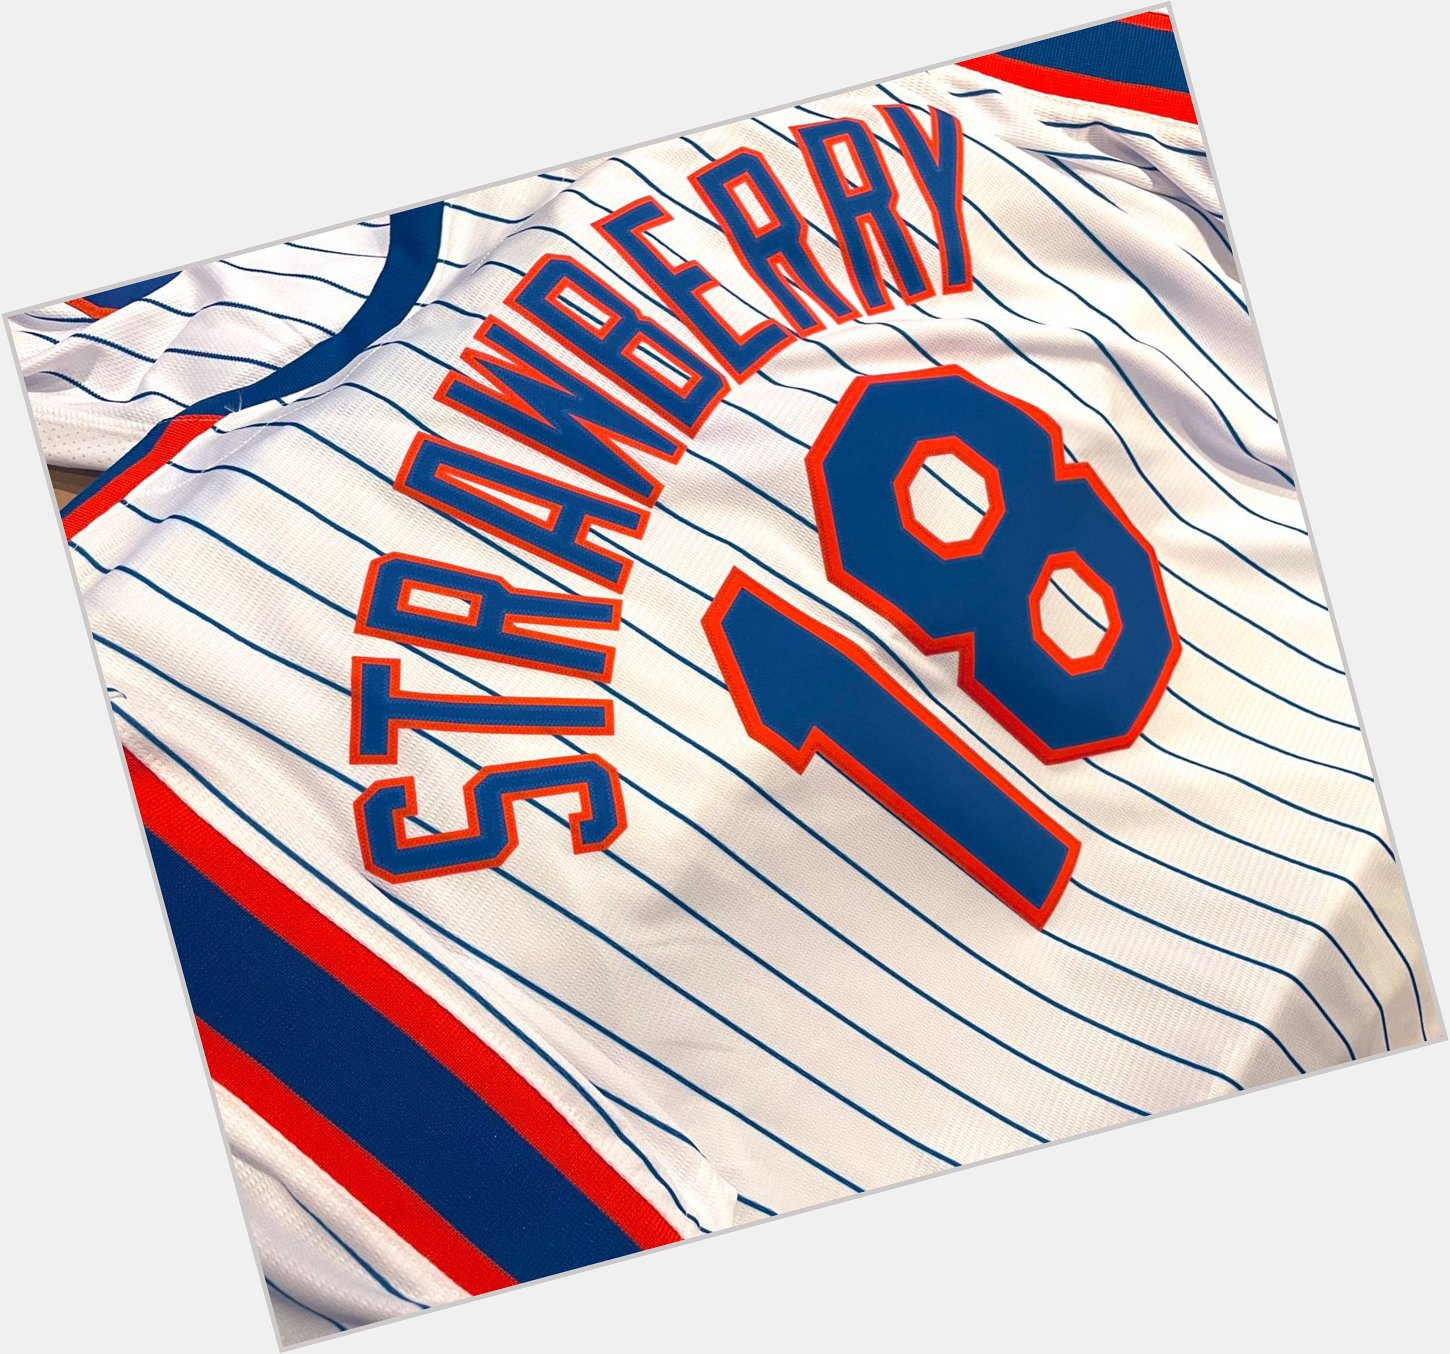 Happy Birthday to 1986 World Series Champion, Darryl Strawberry!        